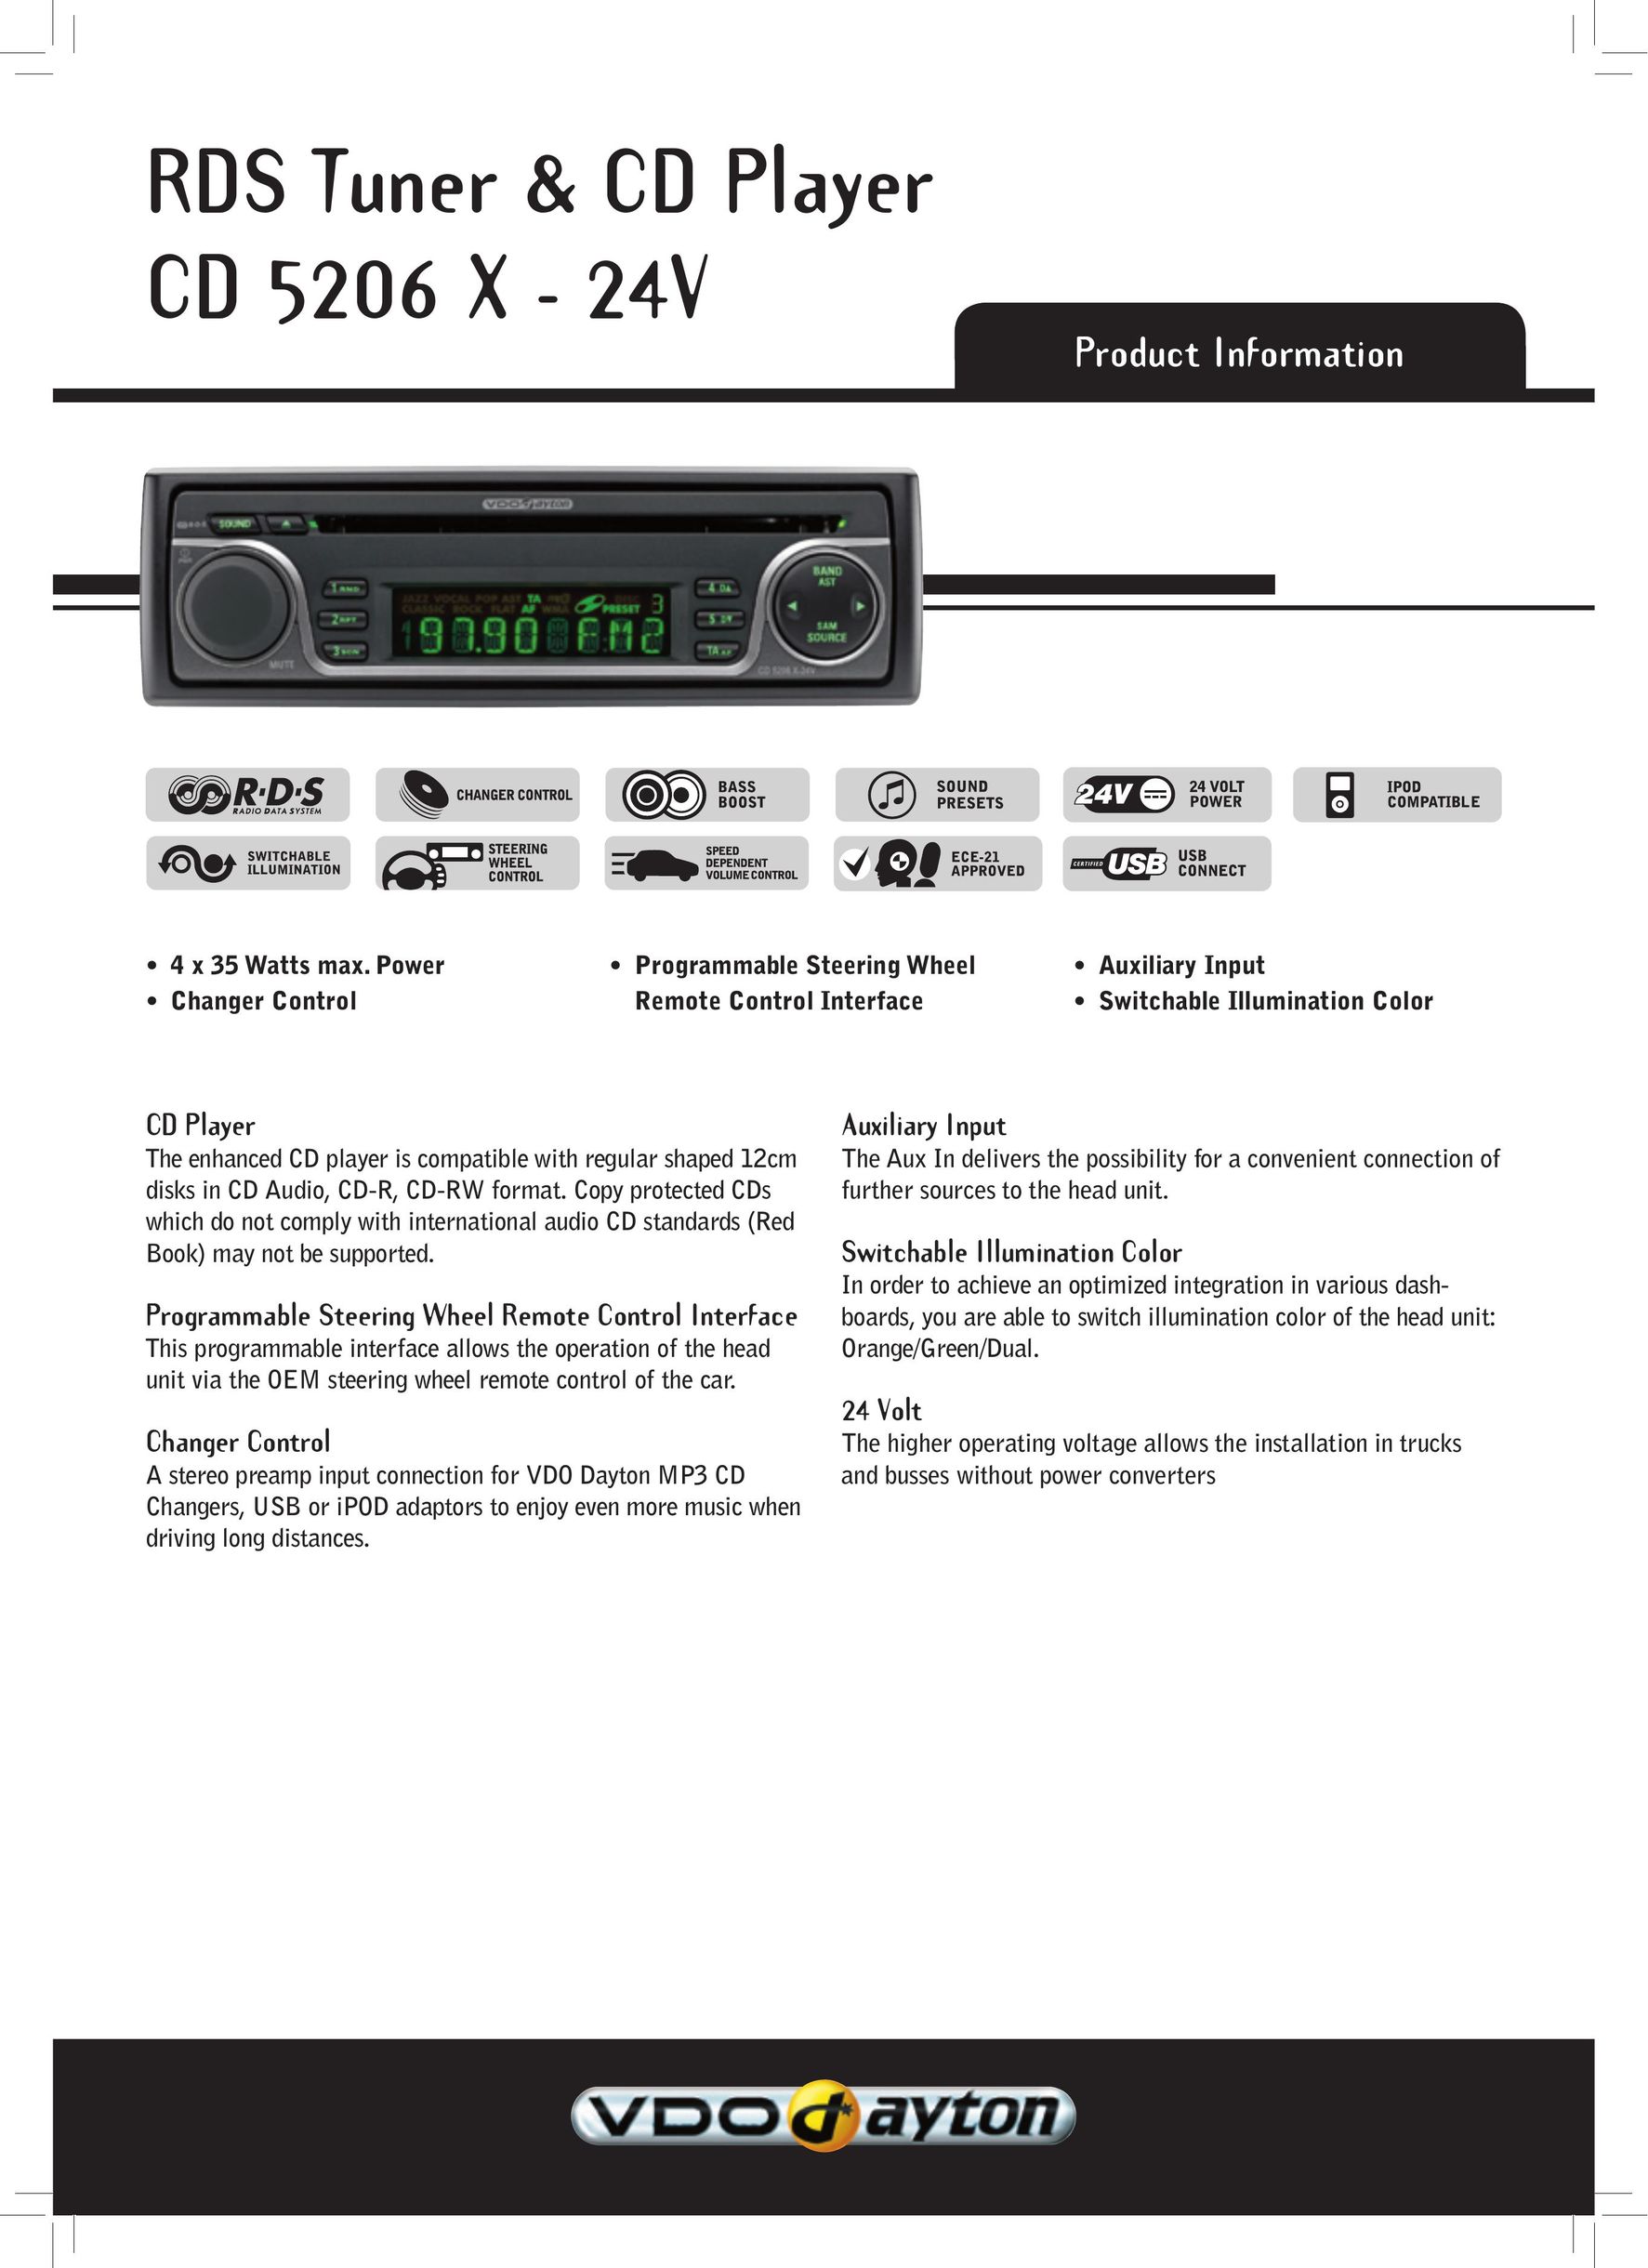 VDO Dayton CD 5206 X - 24V CD Player User Manual